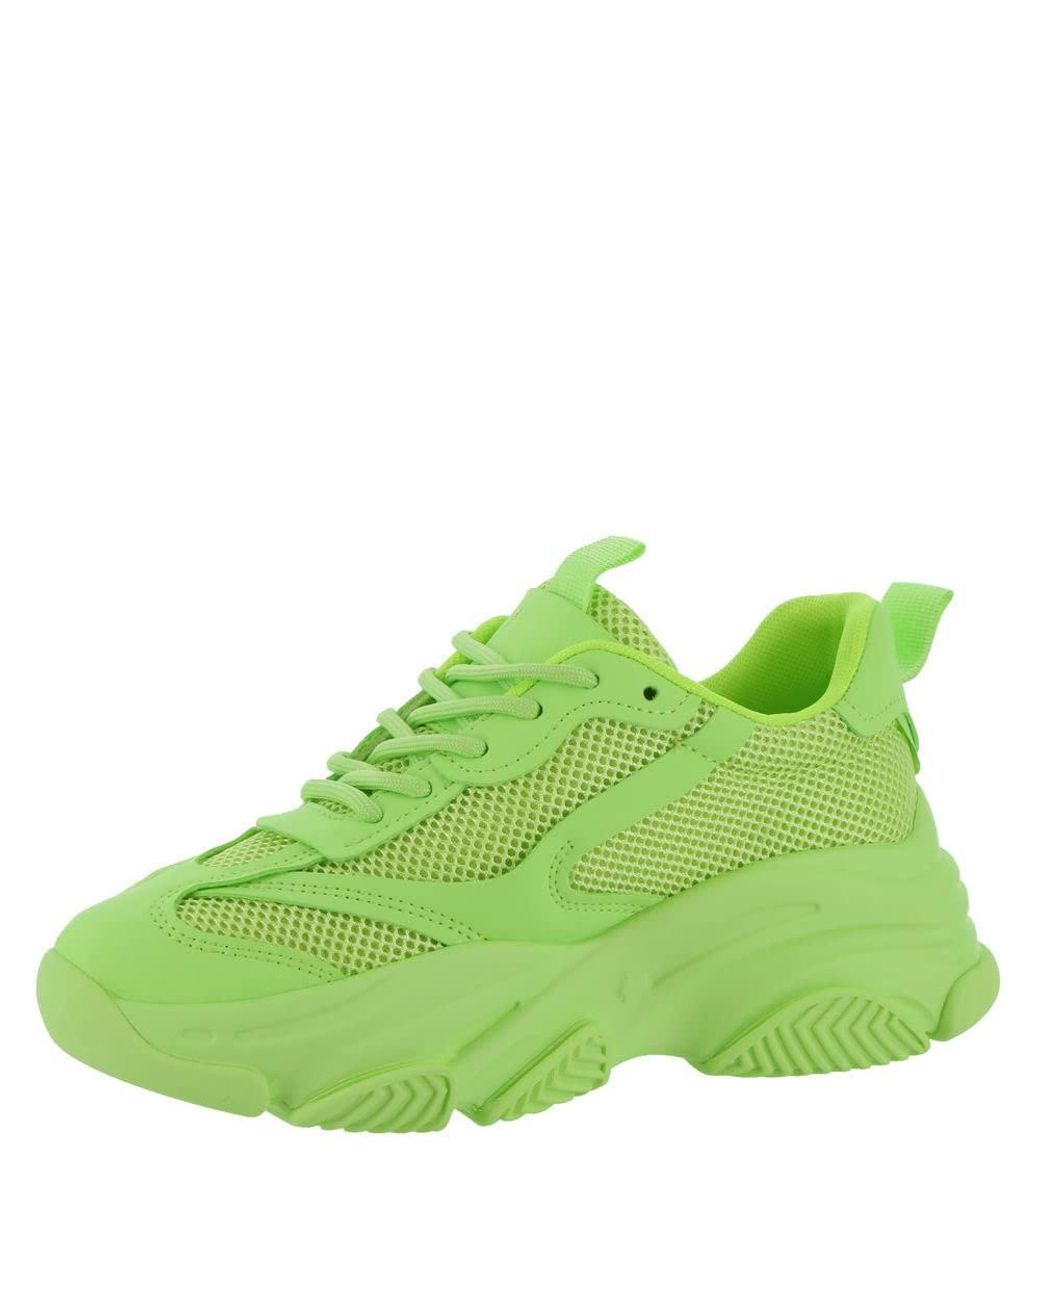 Steve Madden Synthetic Possession Sneaker in Lime (Green) | Lyst